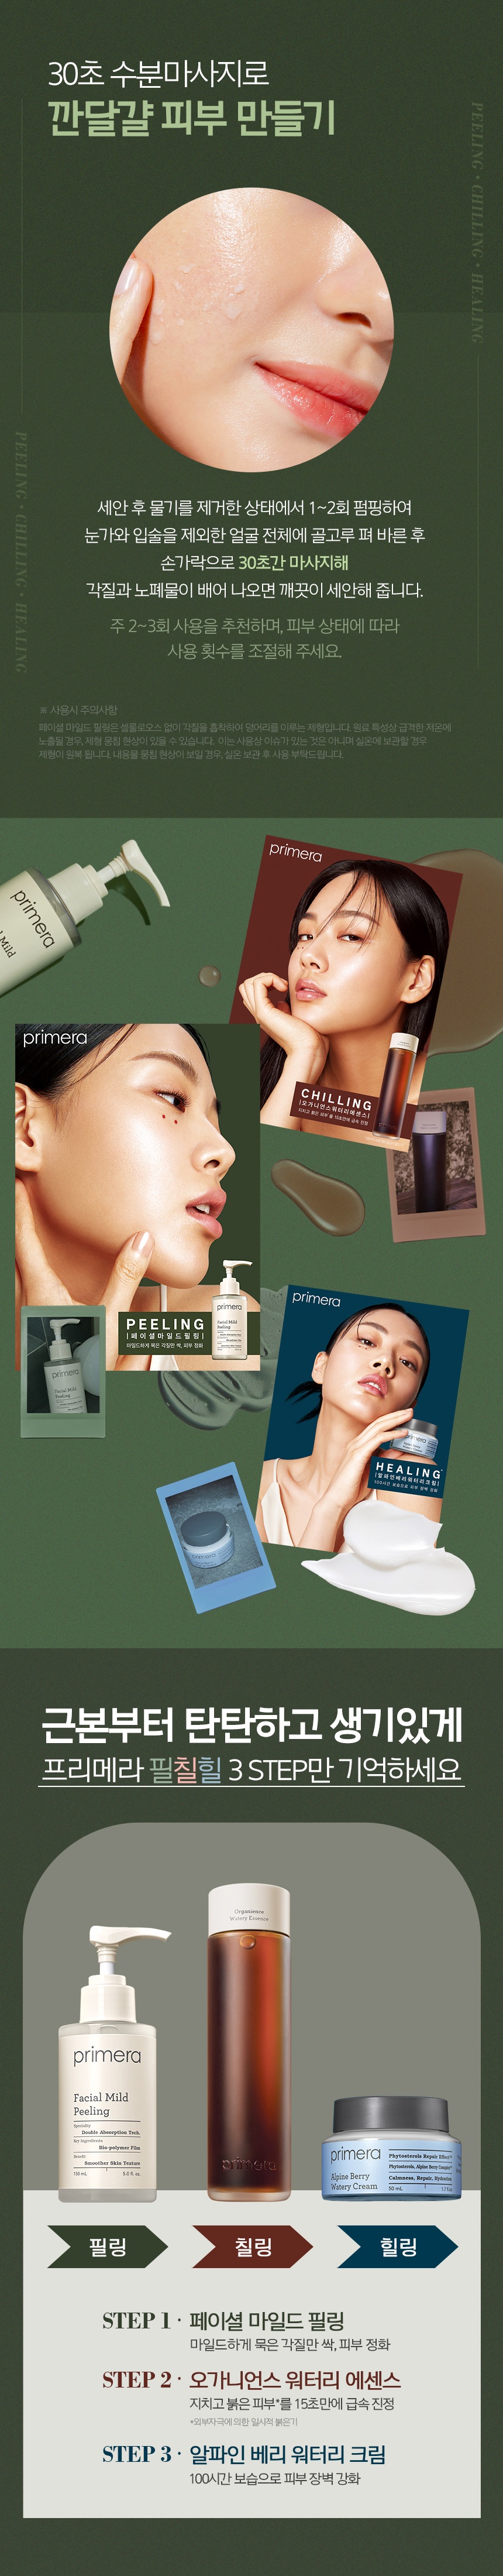 primera Facial Mild Peeling korean skincare product onlien shop malaysia India Thailand5